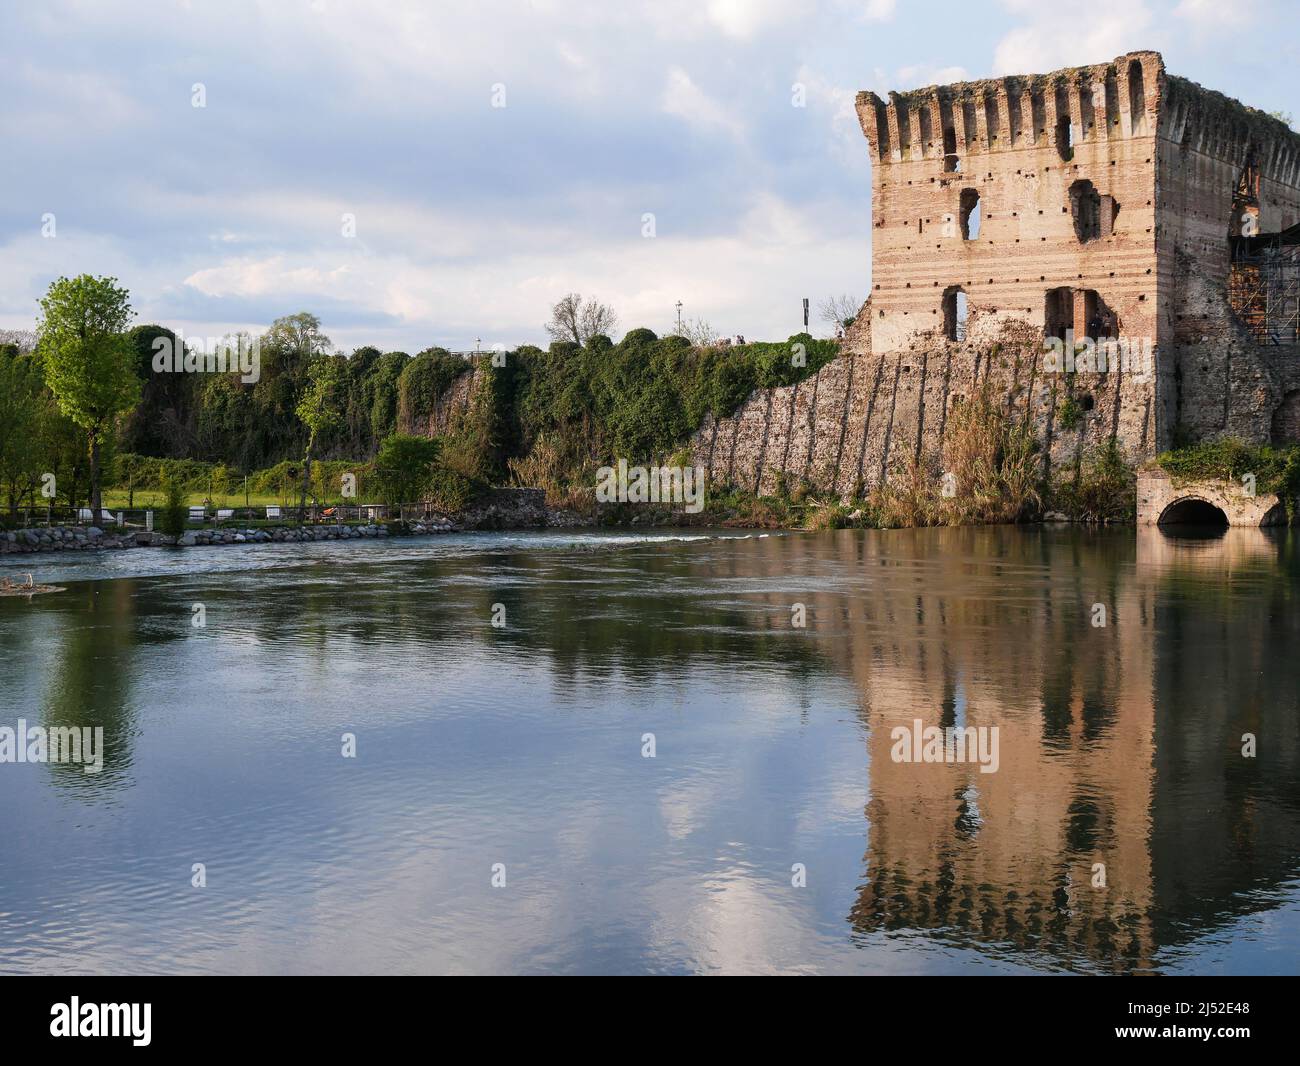 The beautiful city of Borghetto sul Mincio, near Verona, Italy Stock Photo